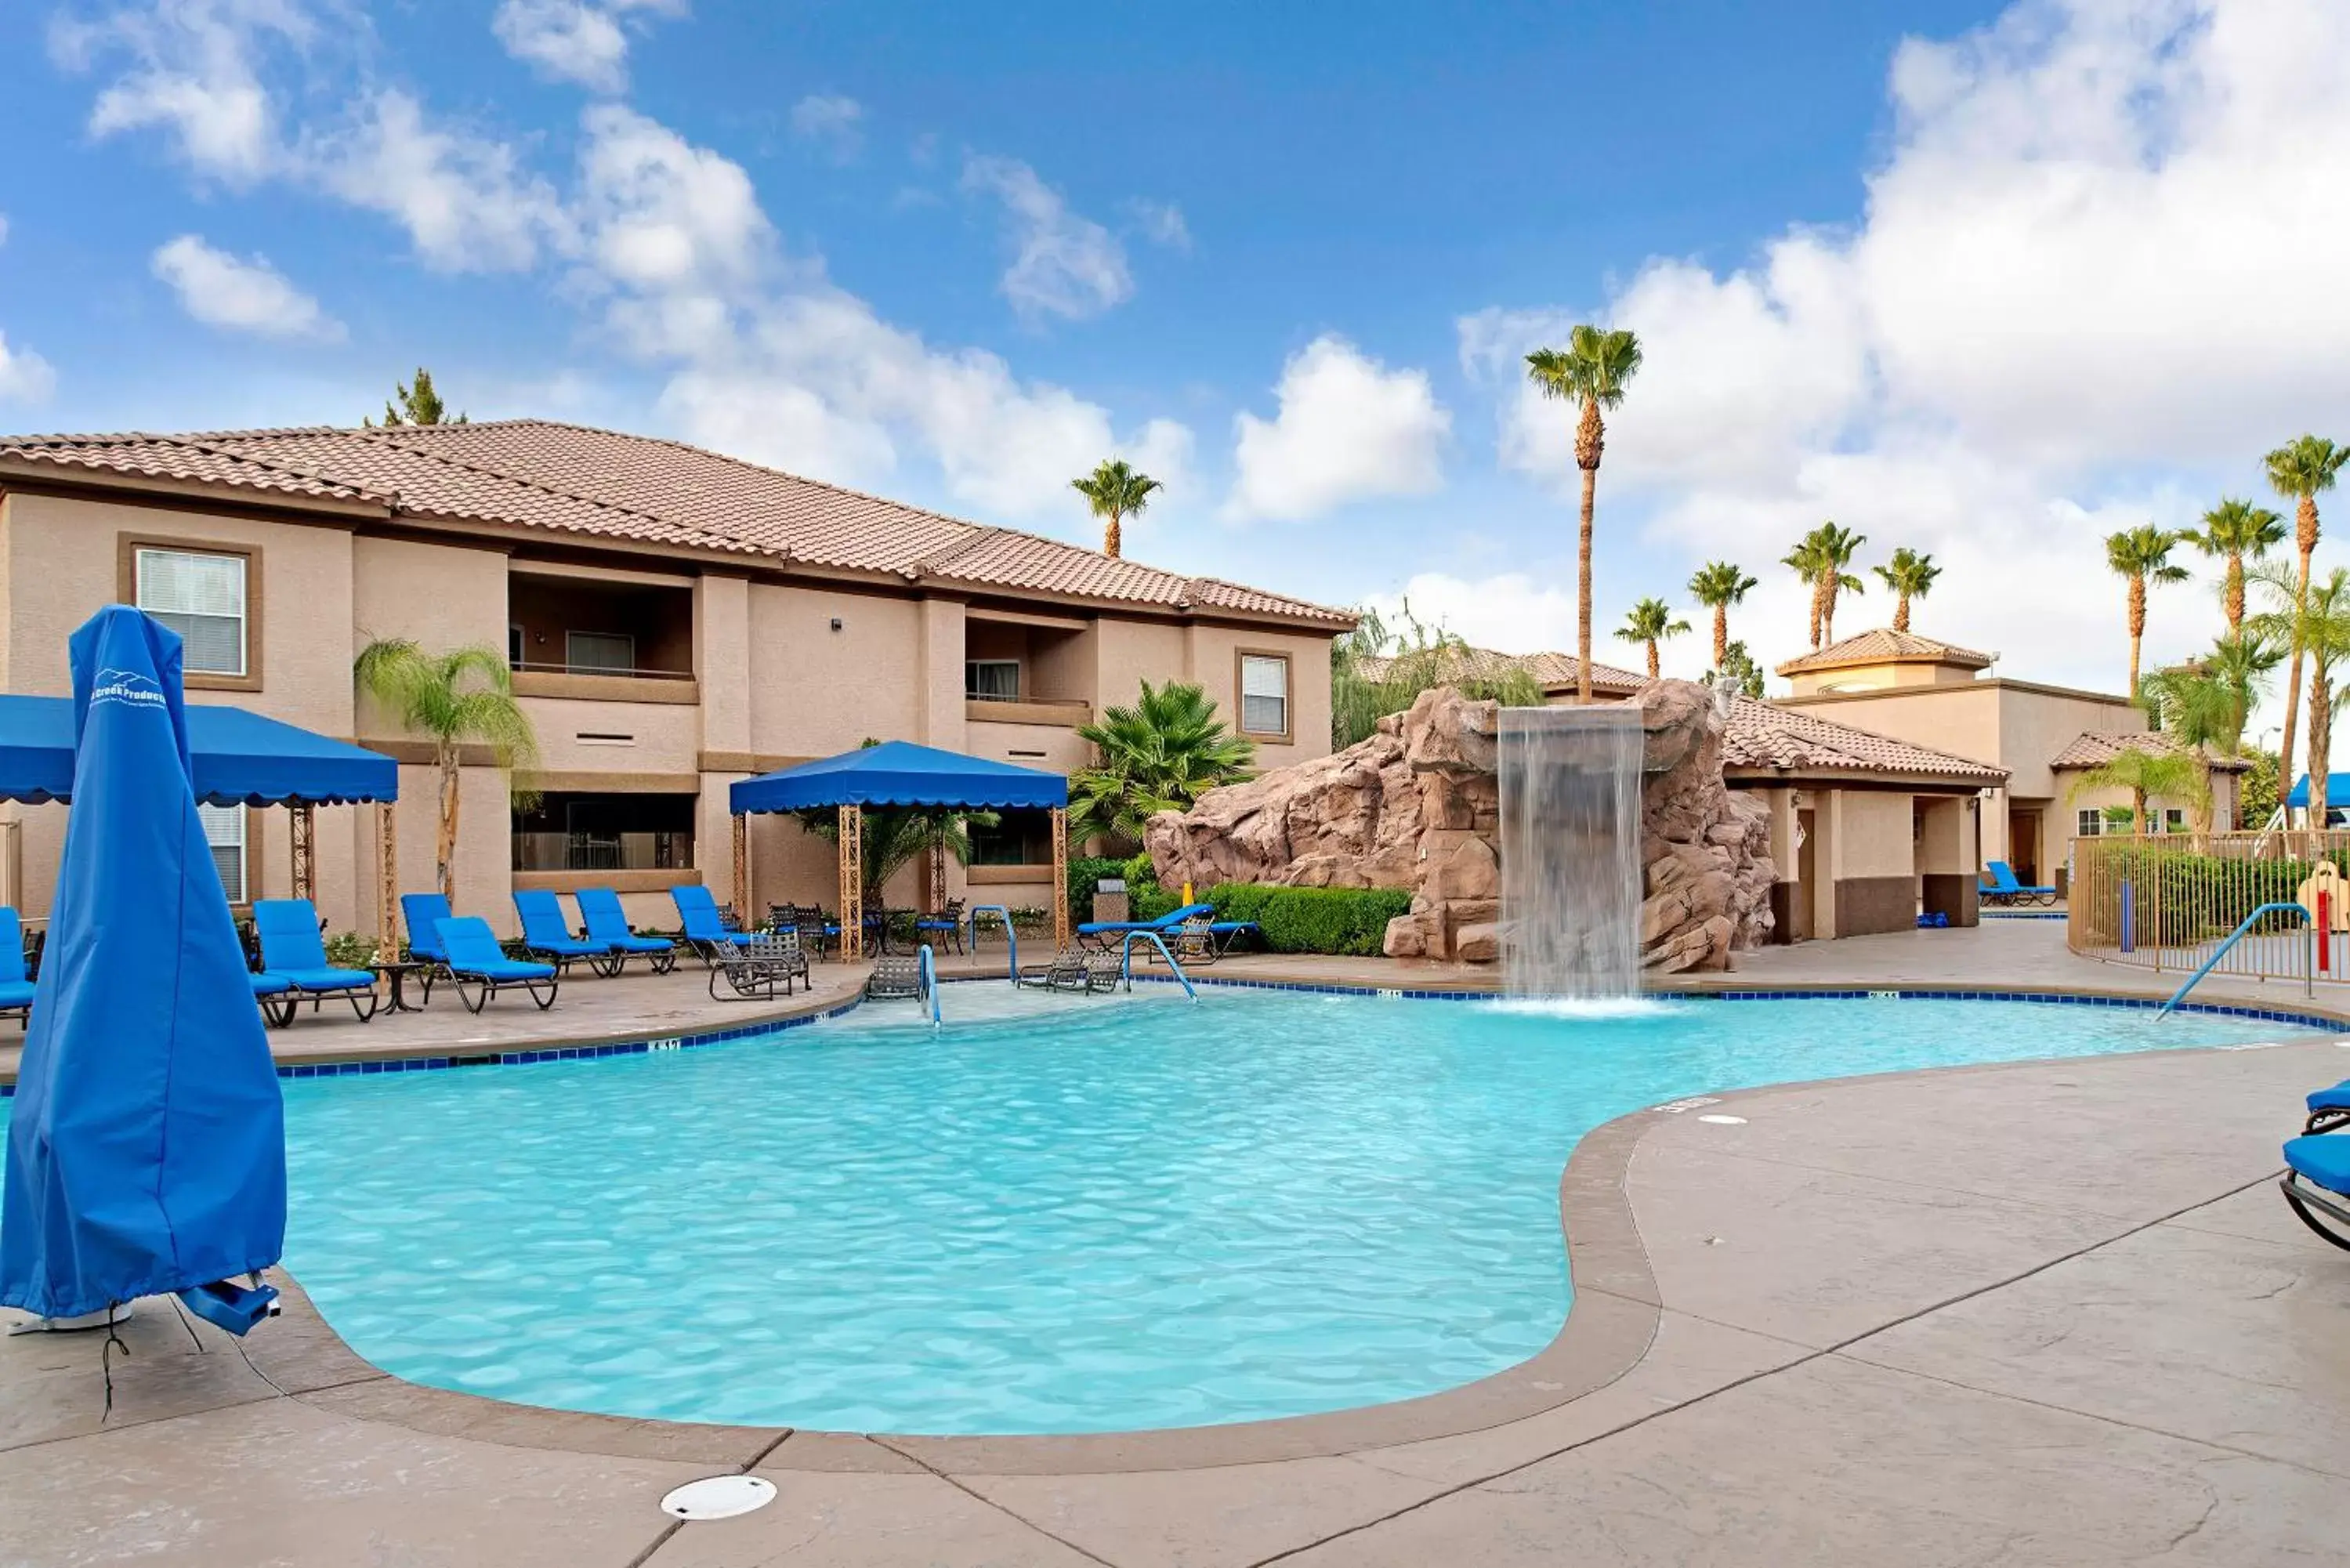 Swimming Pool in Hilton Vacation Club Desert Retreat Las Vegas